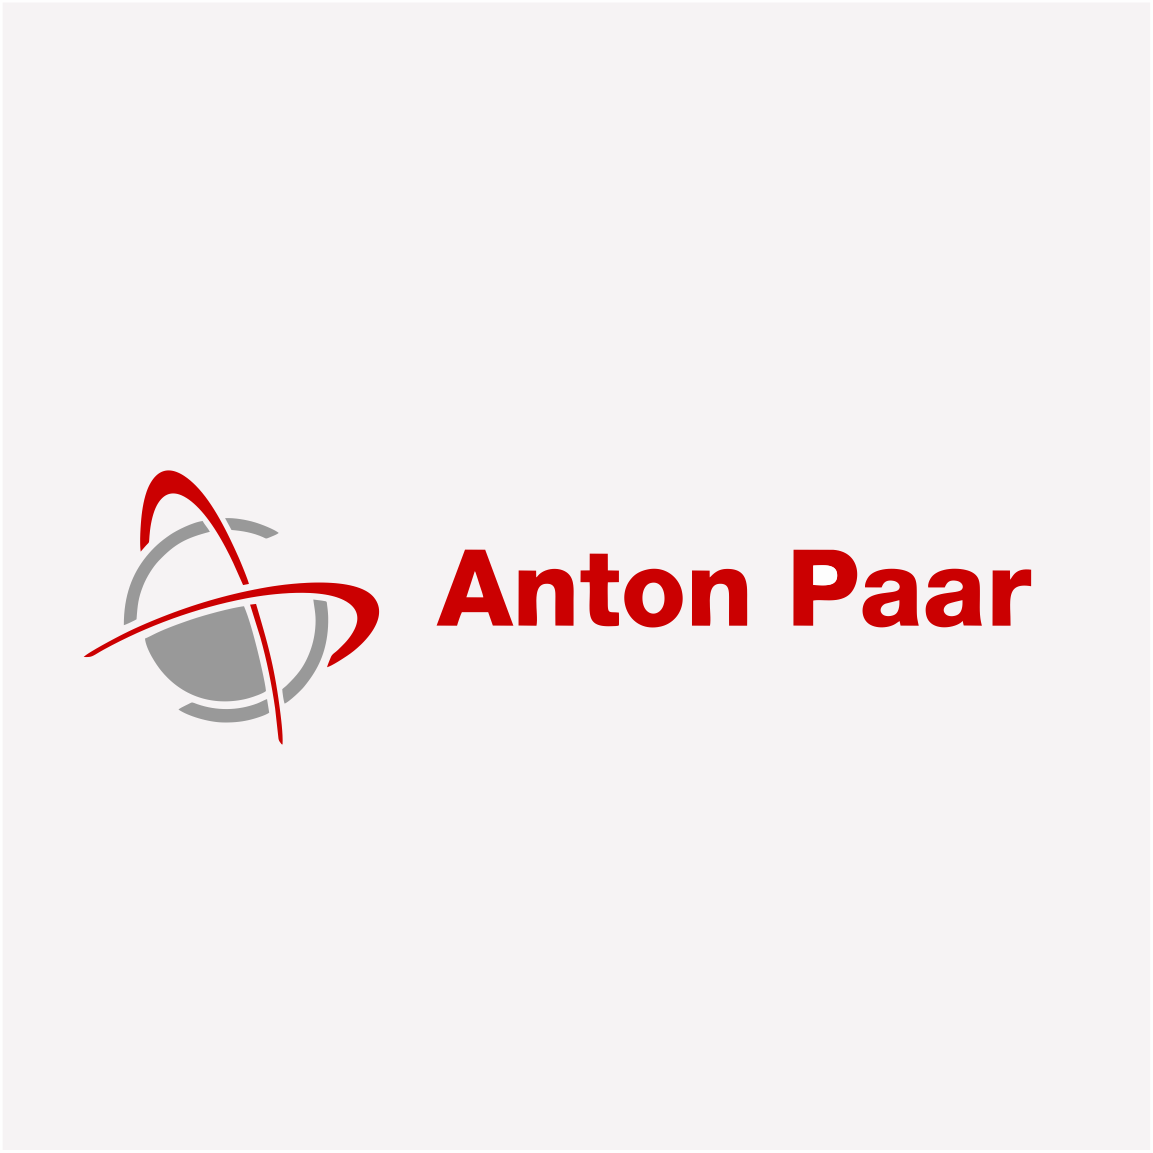 anton_paar logo